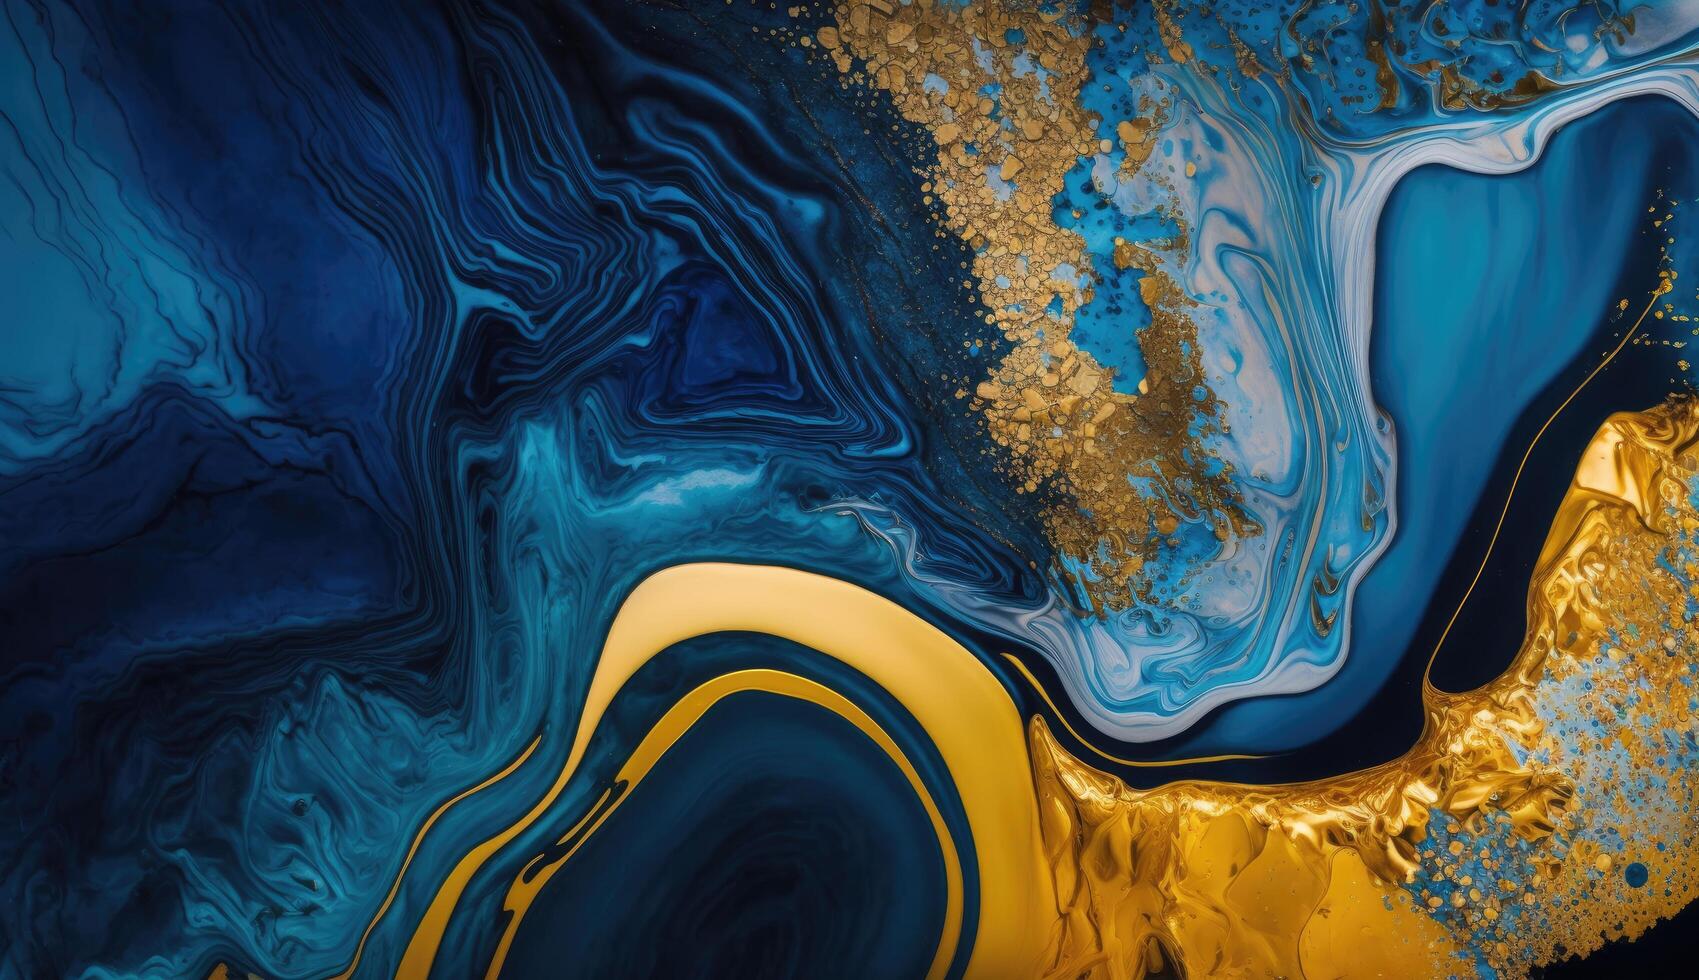 goud en marine blauw marmeren abstract achtergrond, waterverf verf structuur foto